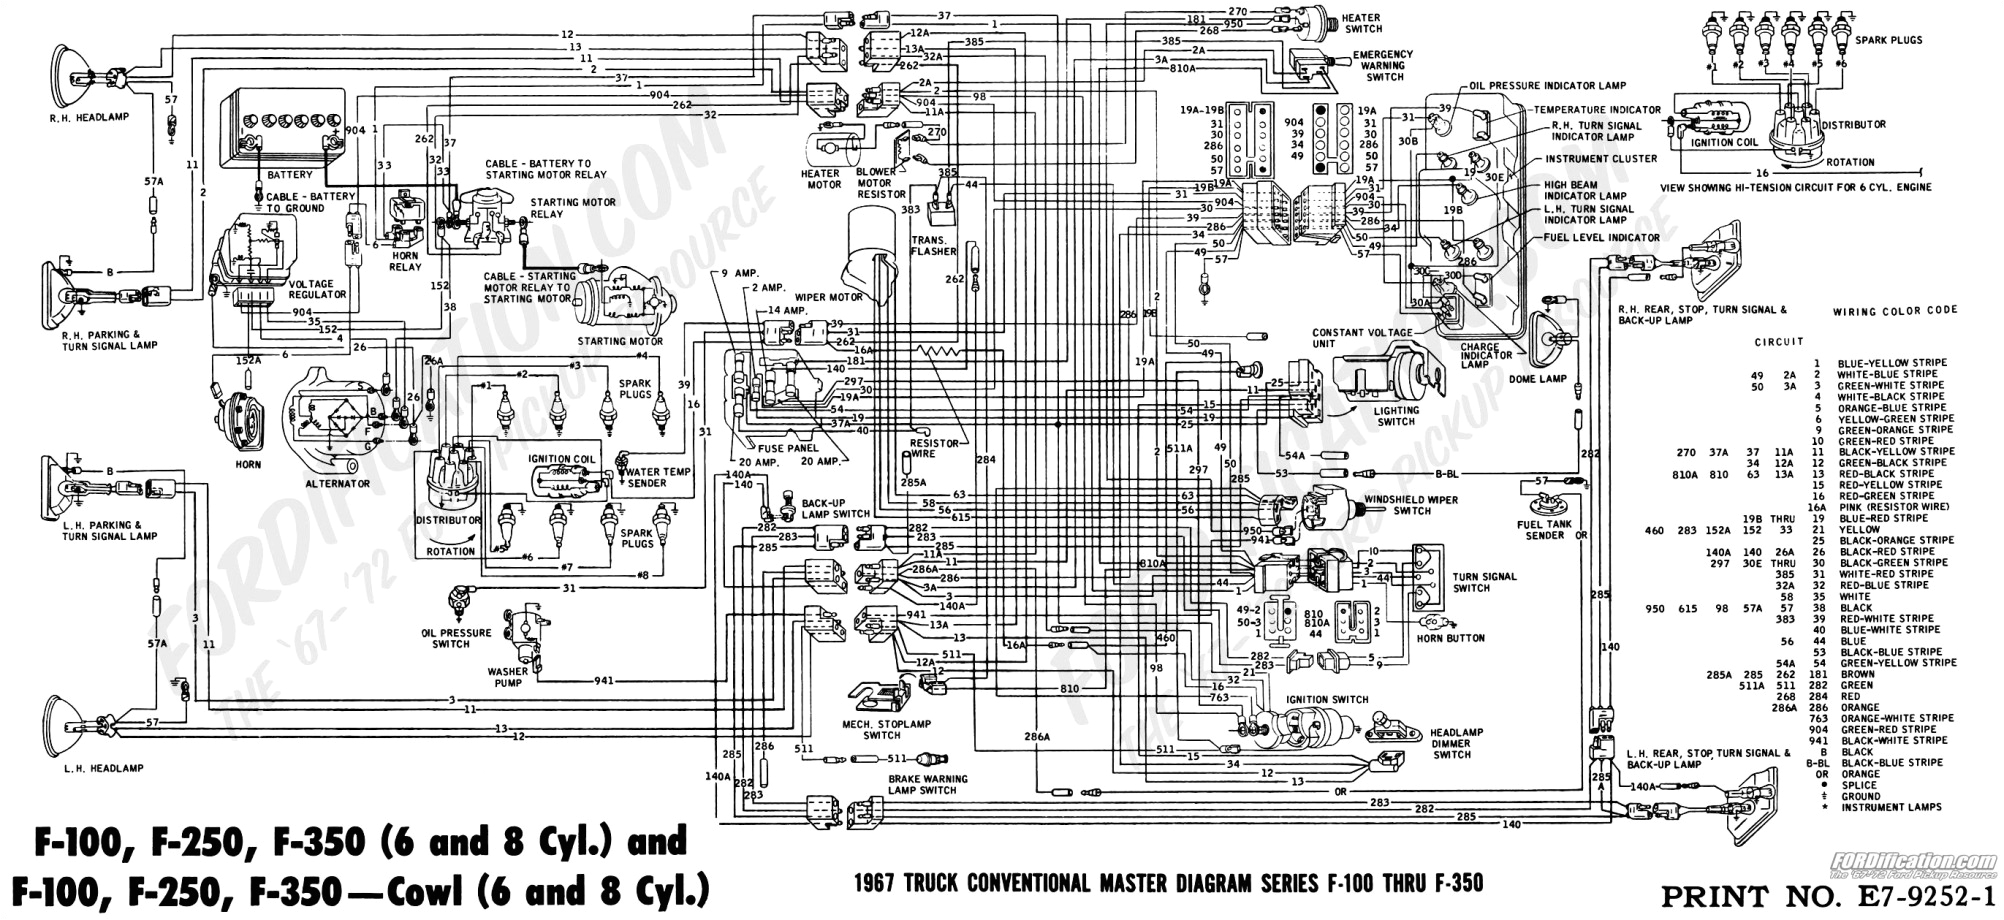 ford f 150 2 7l wiring harness diagram wiring diagram info ford f 150 2 7l wiring harness diagram